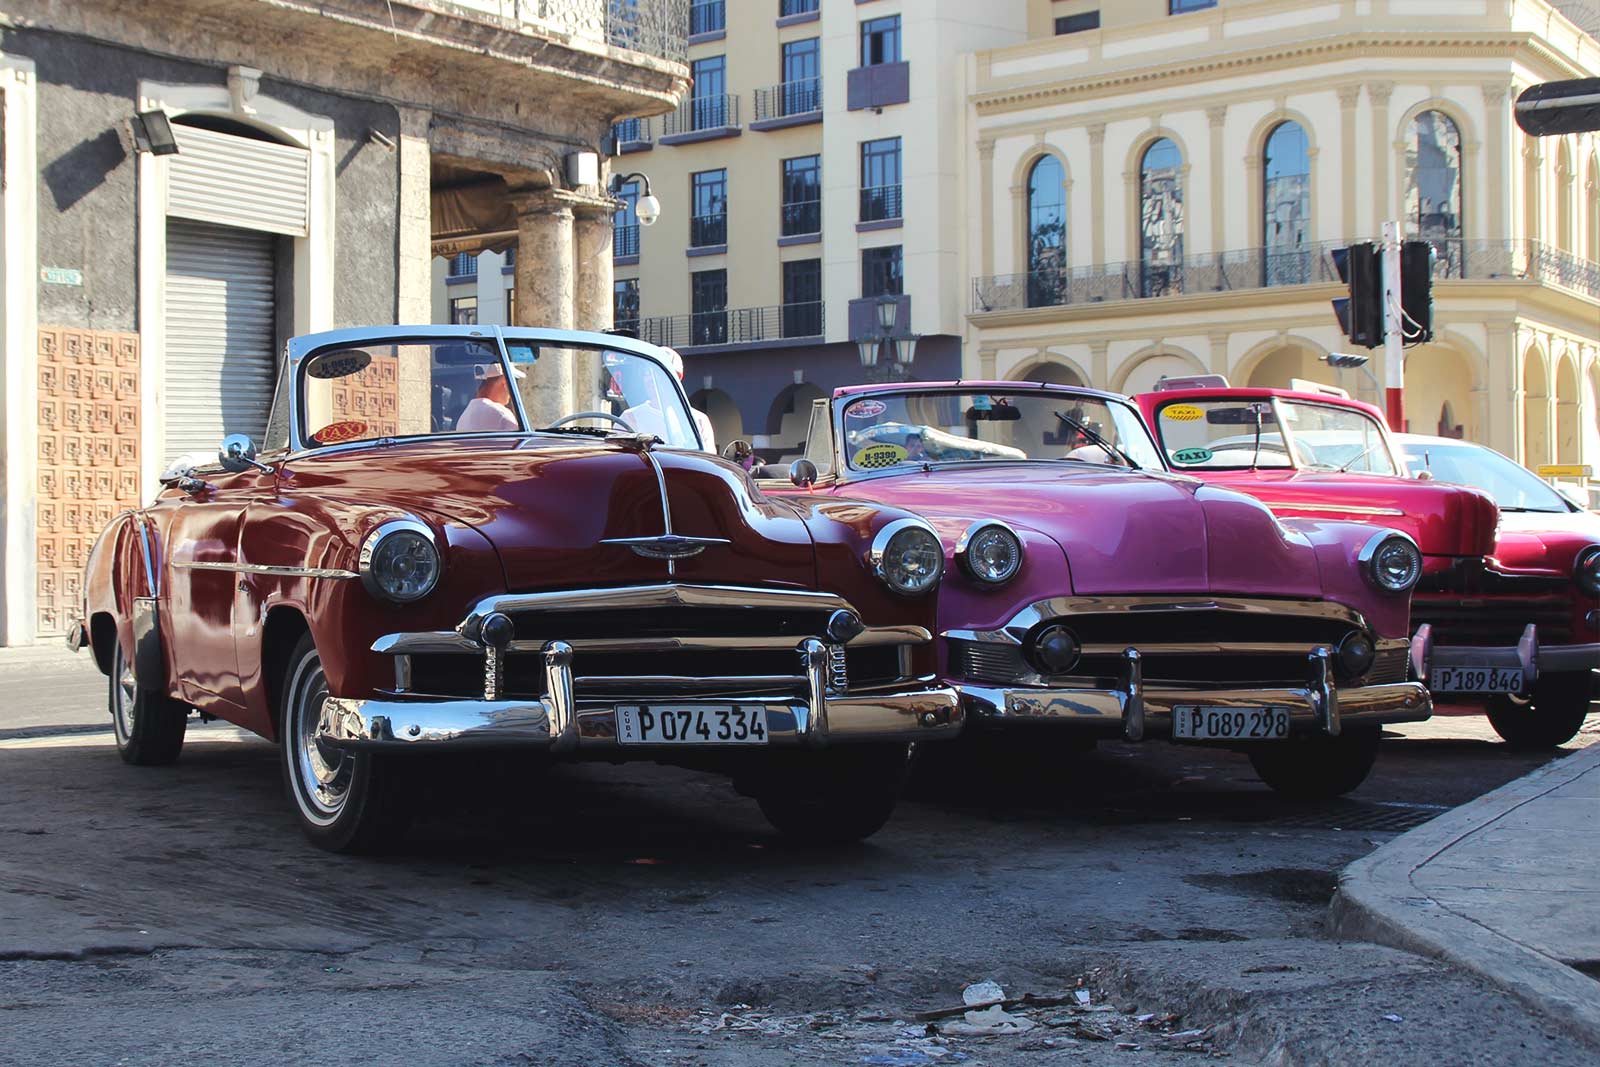 Taxis Cuba